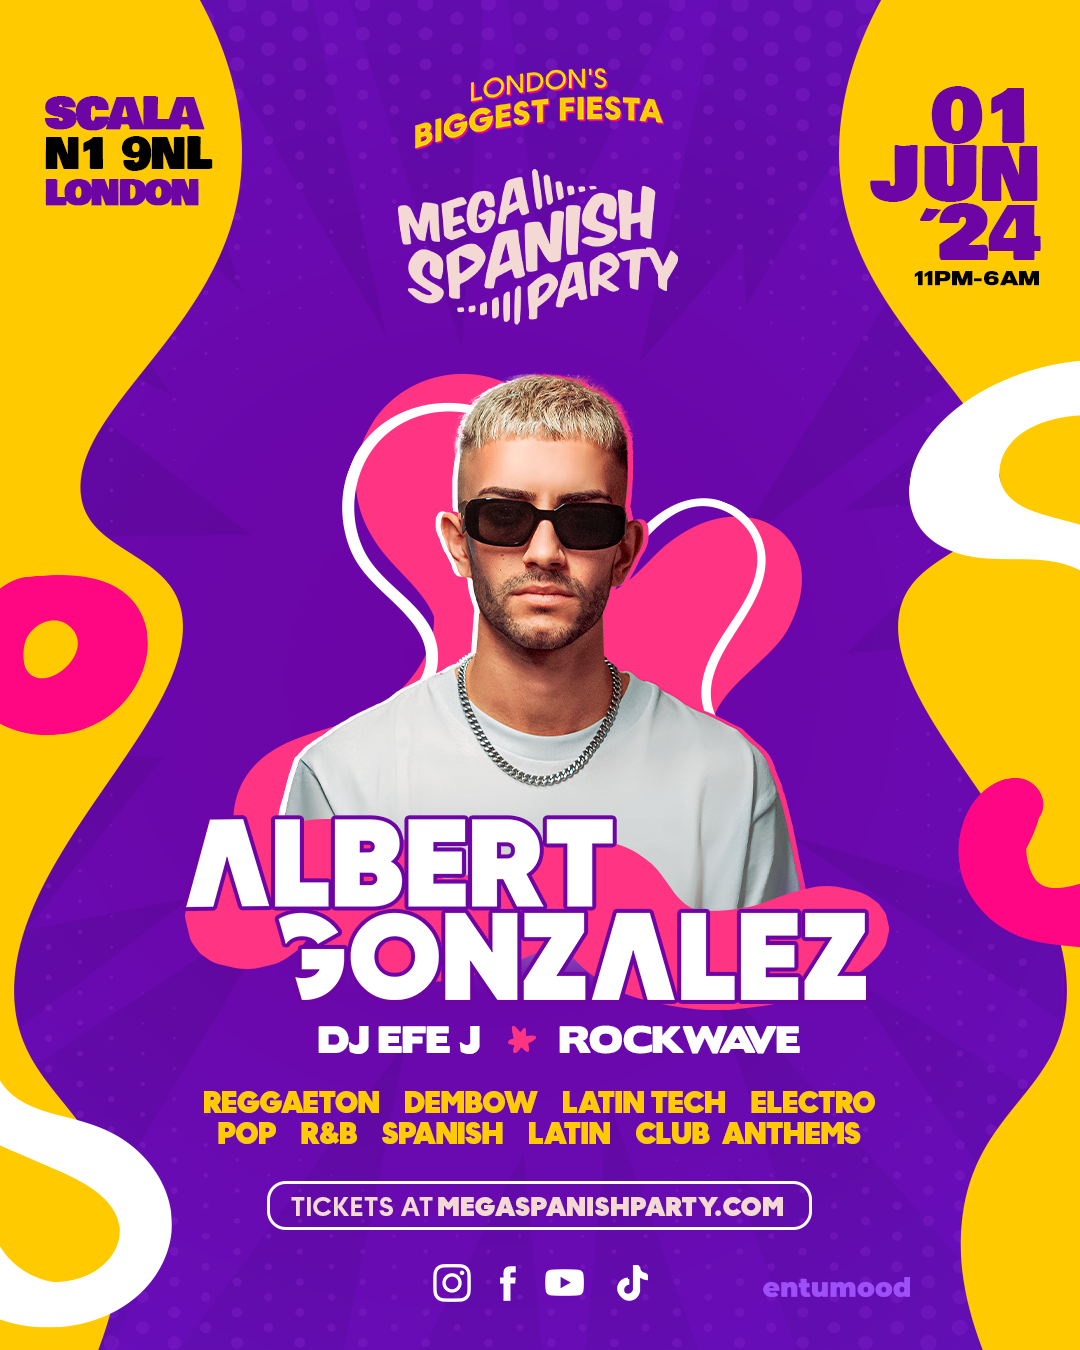 Mega Spanish Party featuring DJ Albert González on Saturday, 1st June 2024, at Scala, King's Cross, London.